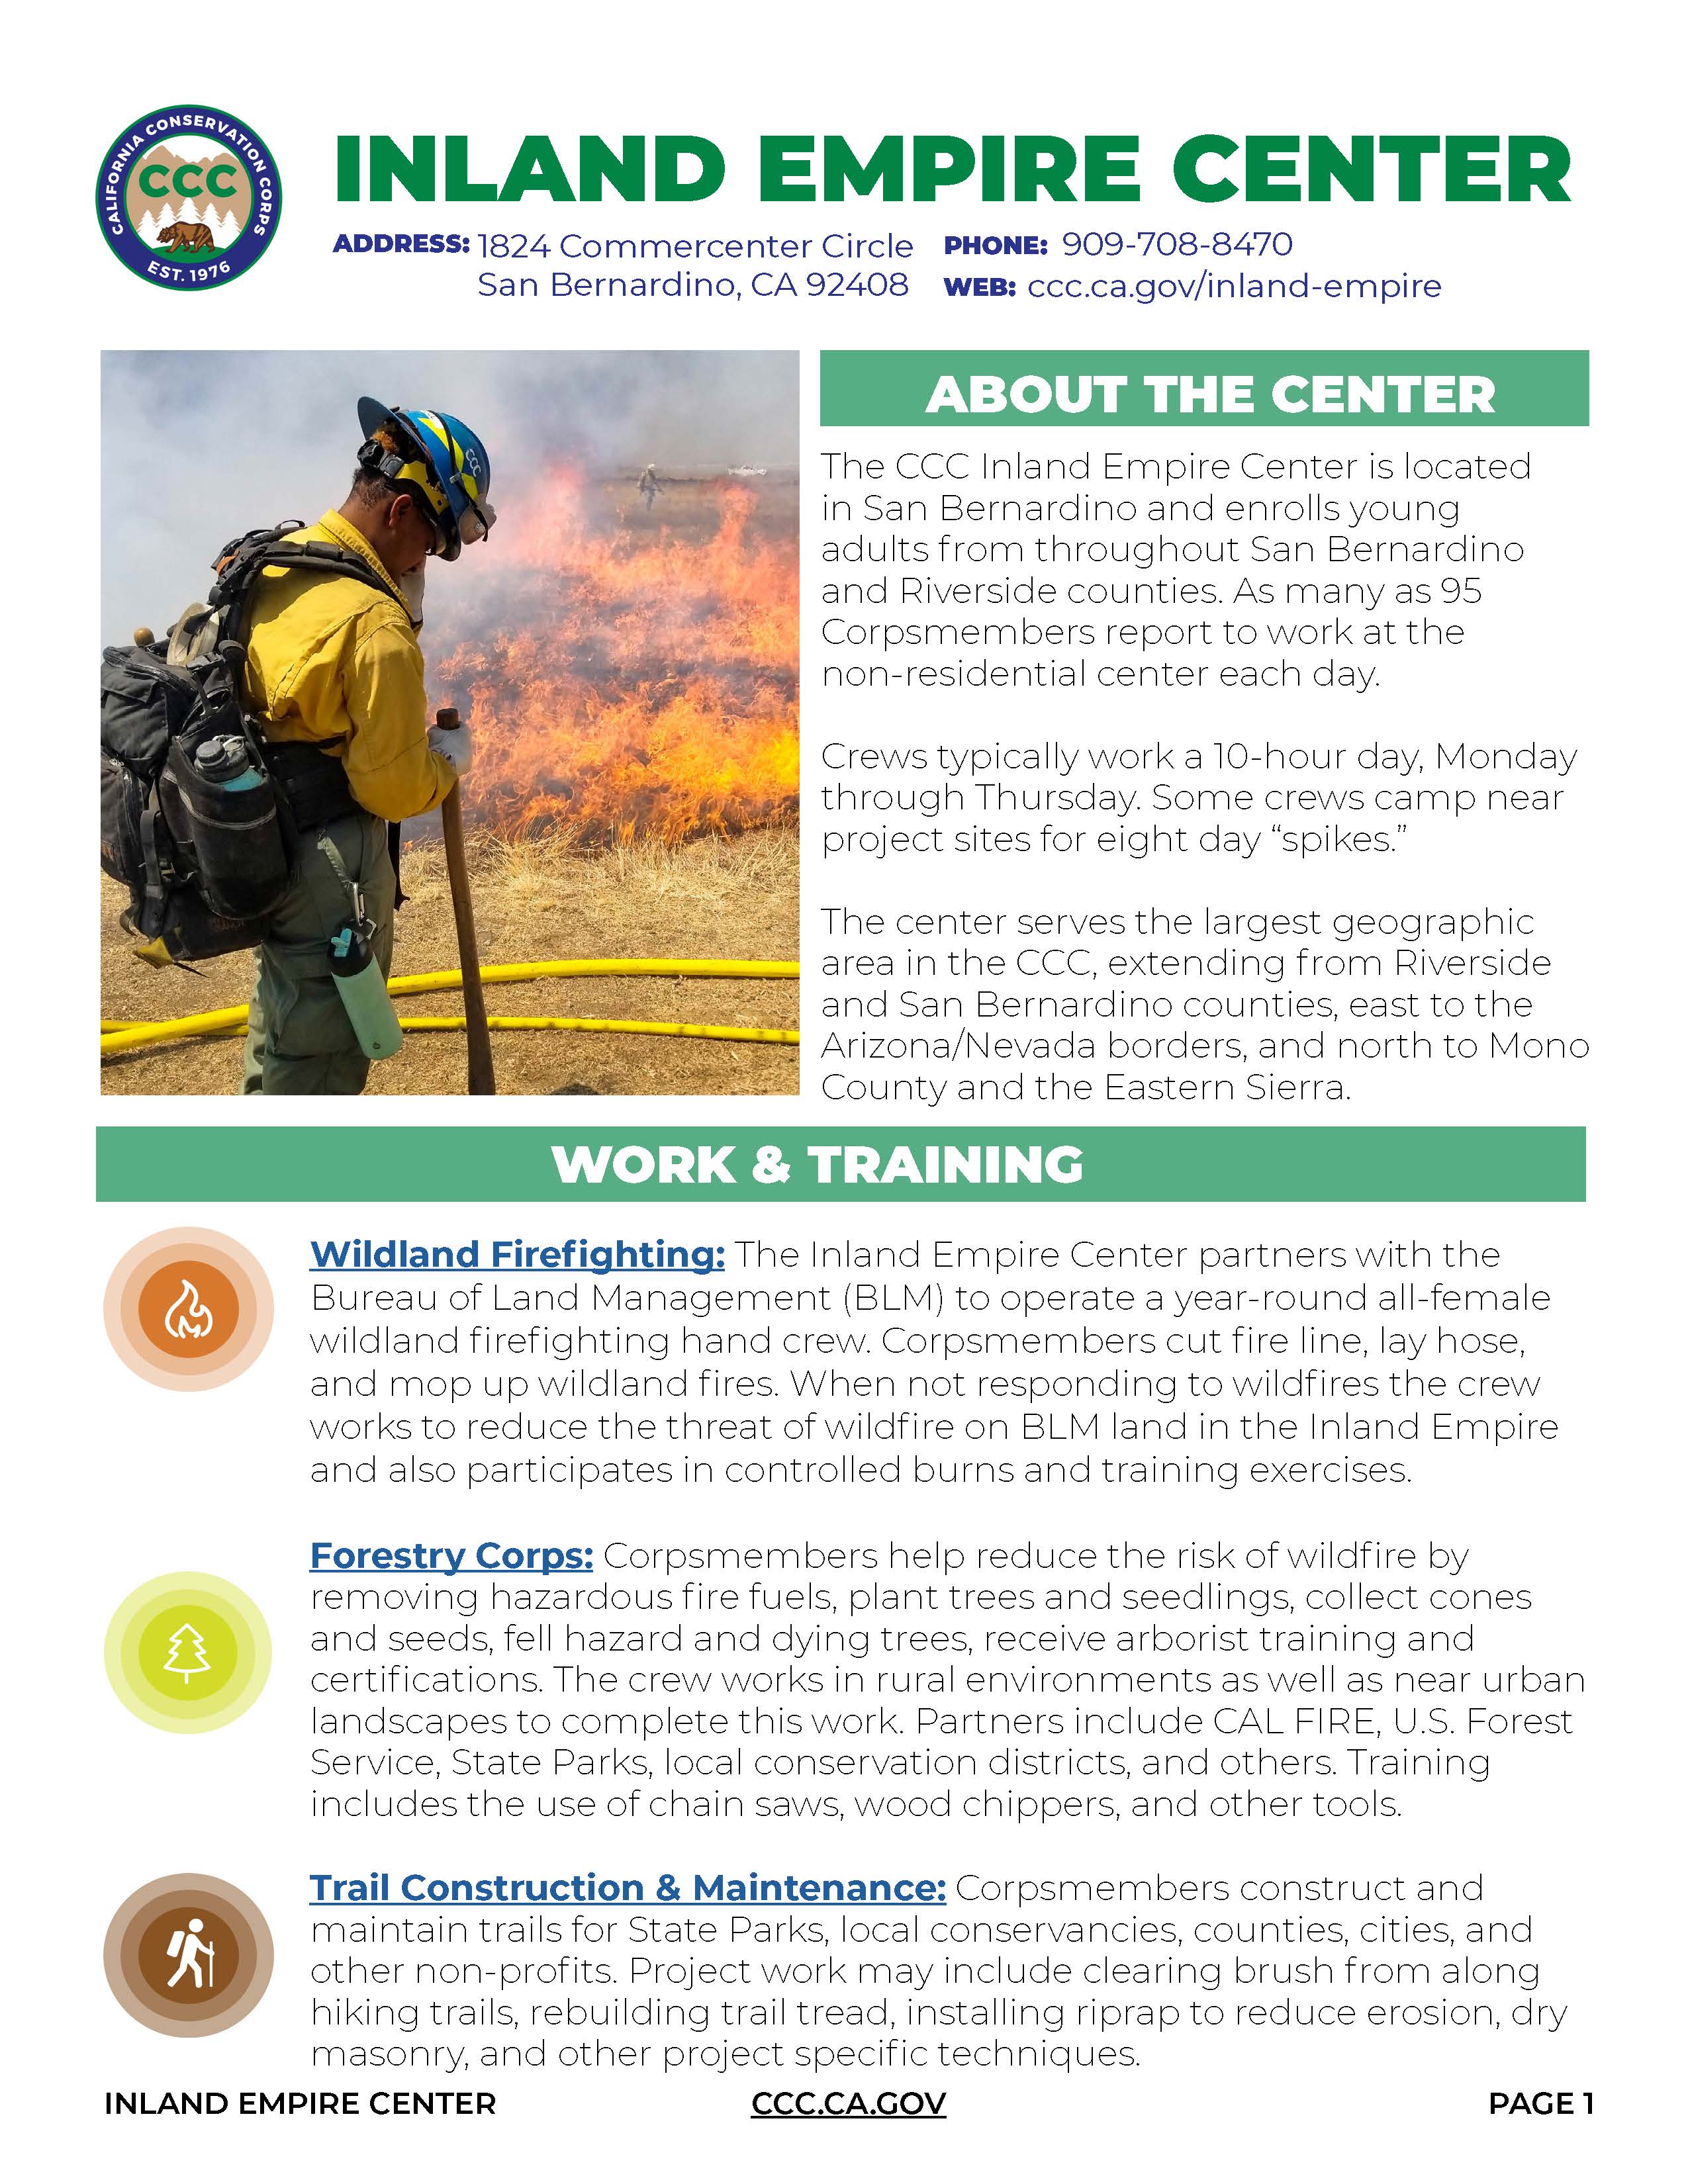 Image of Inland Empire Center Fact Sheet